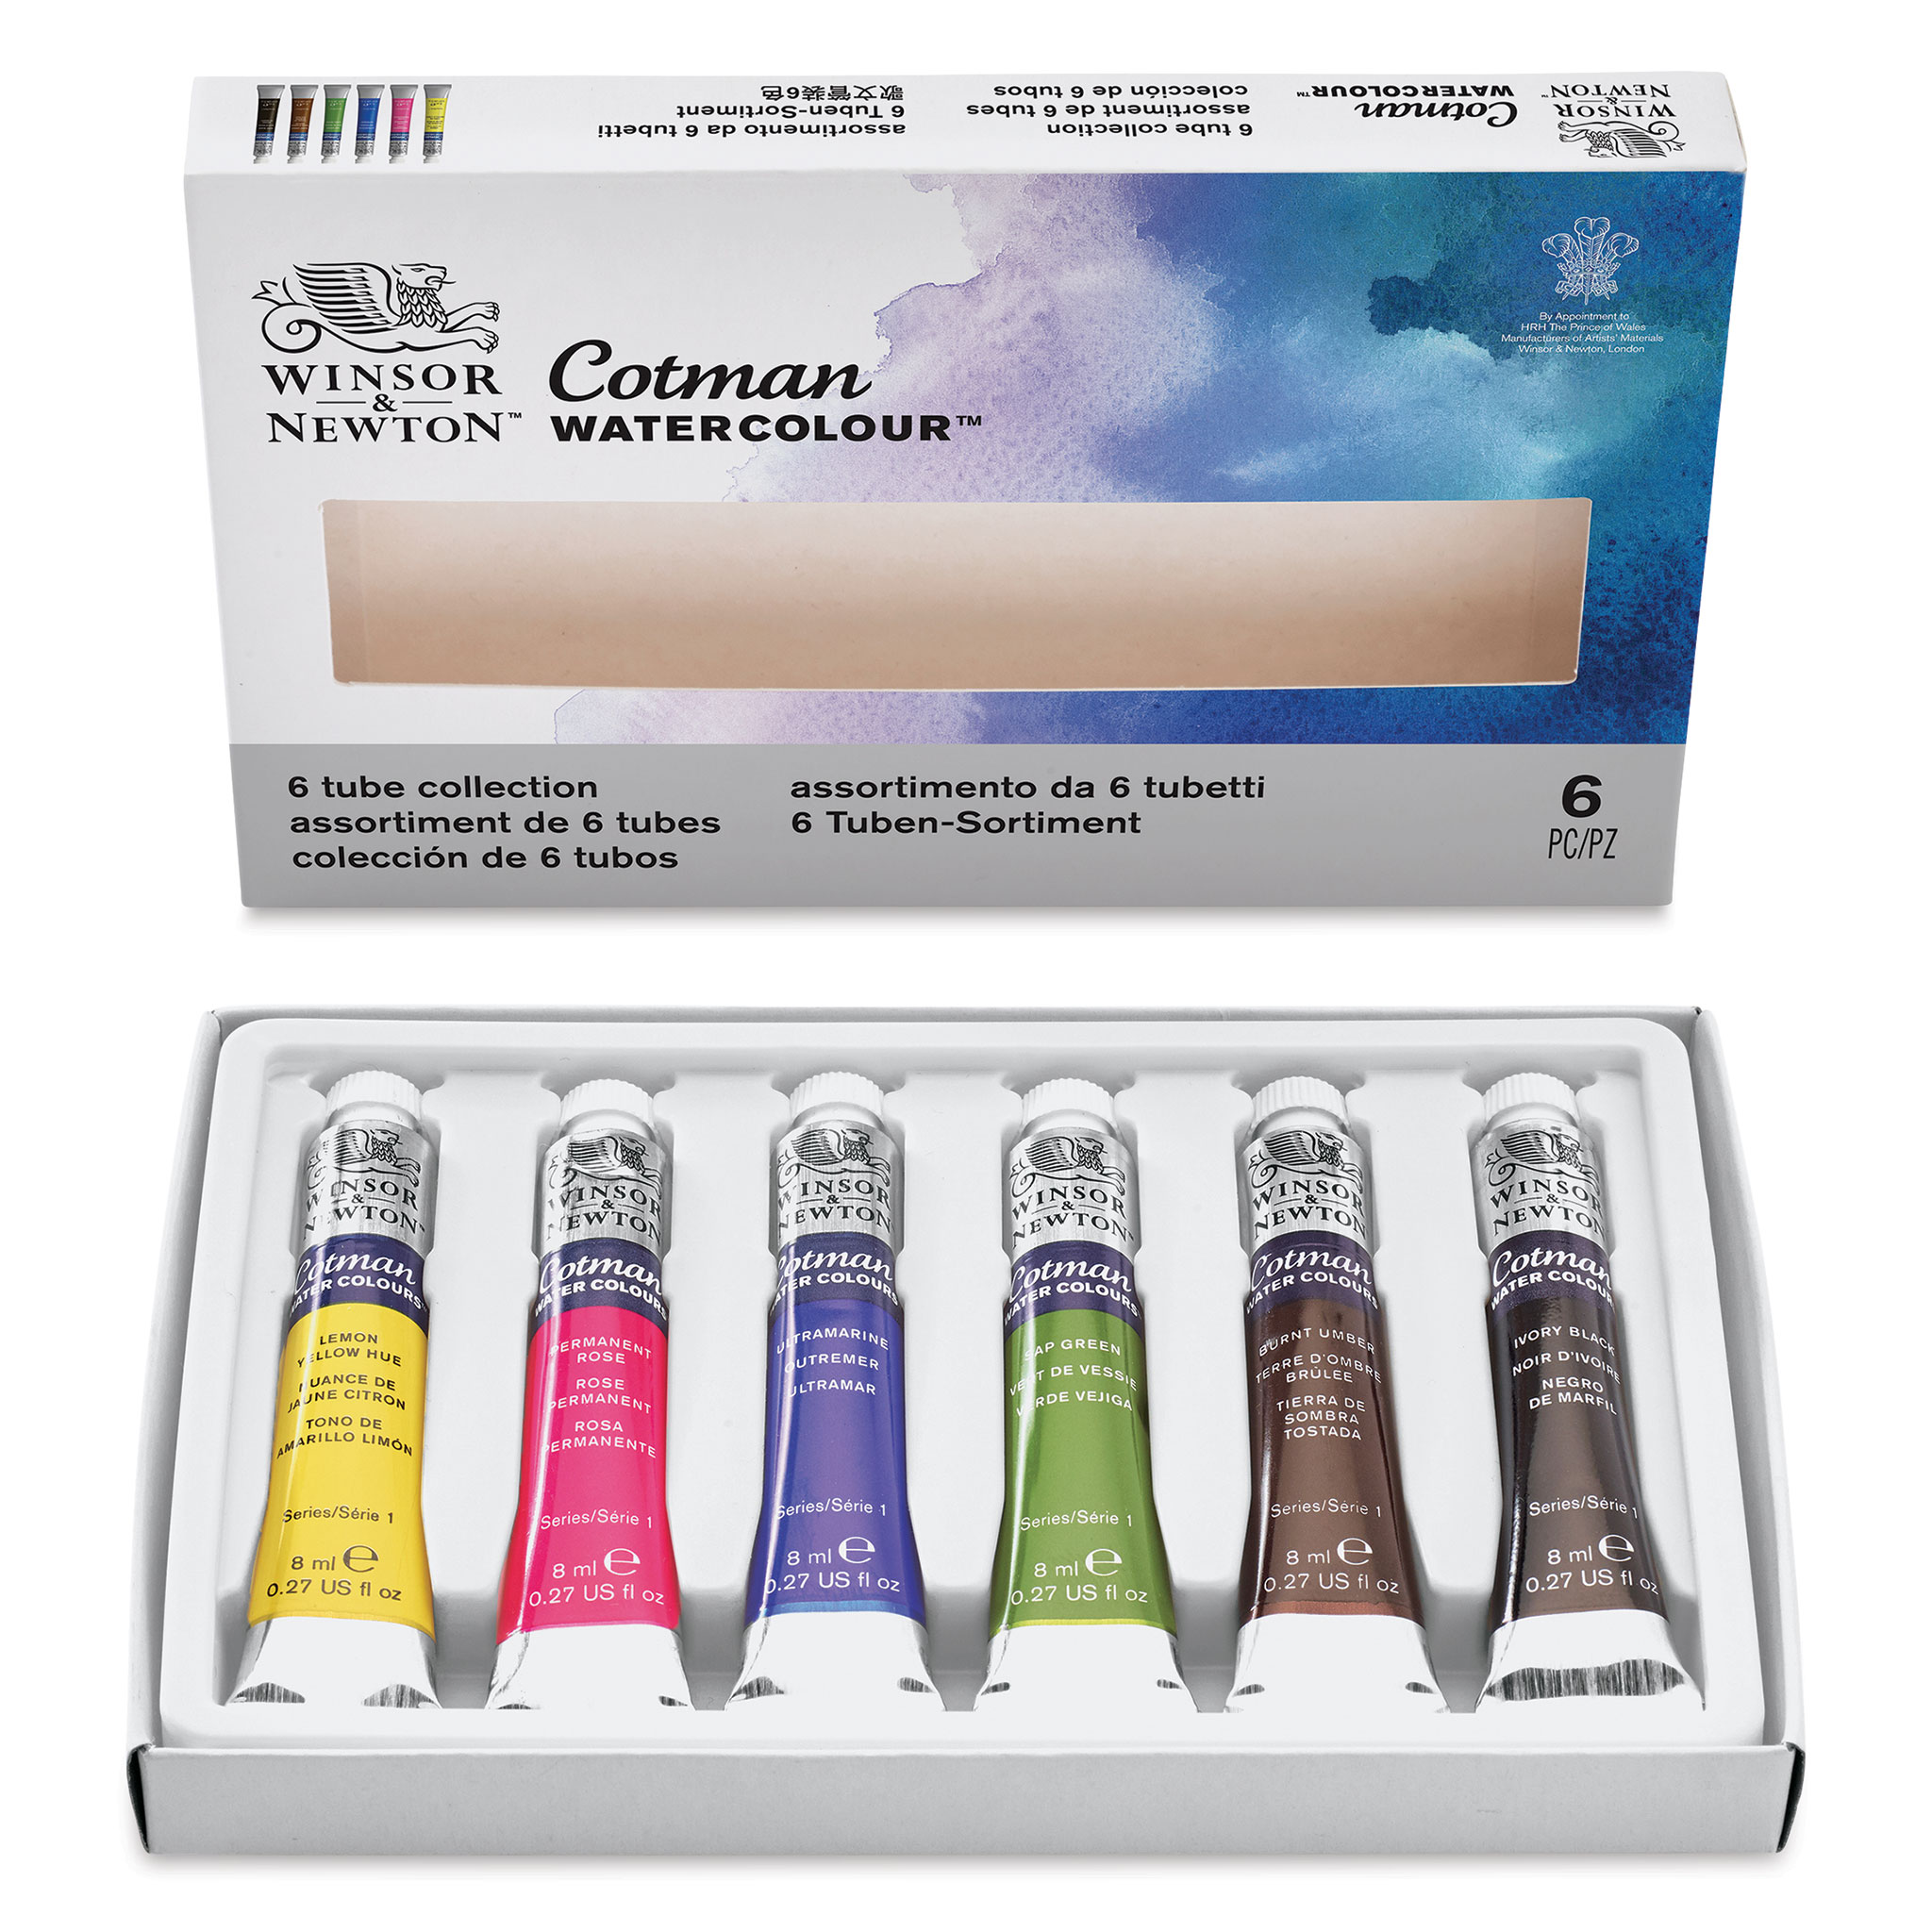 Winsor & Newton Cotman Watercolor Paint Tubes and Sets